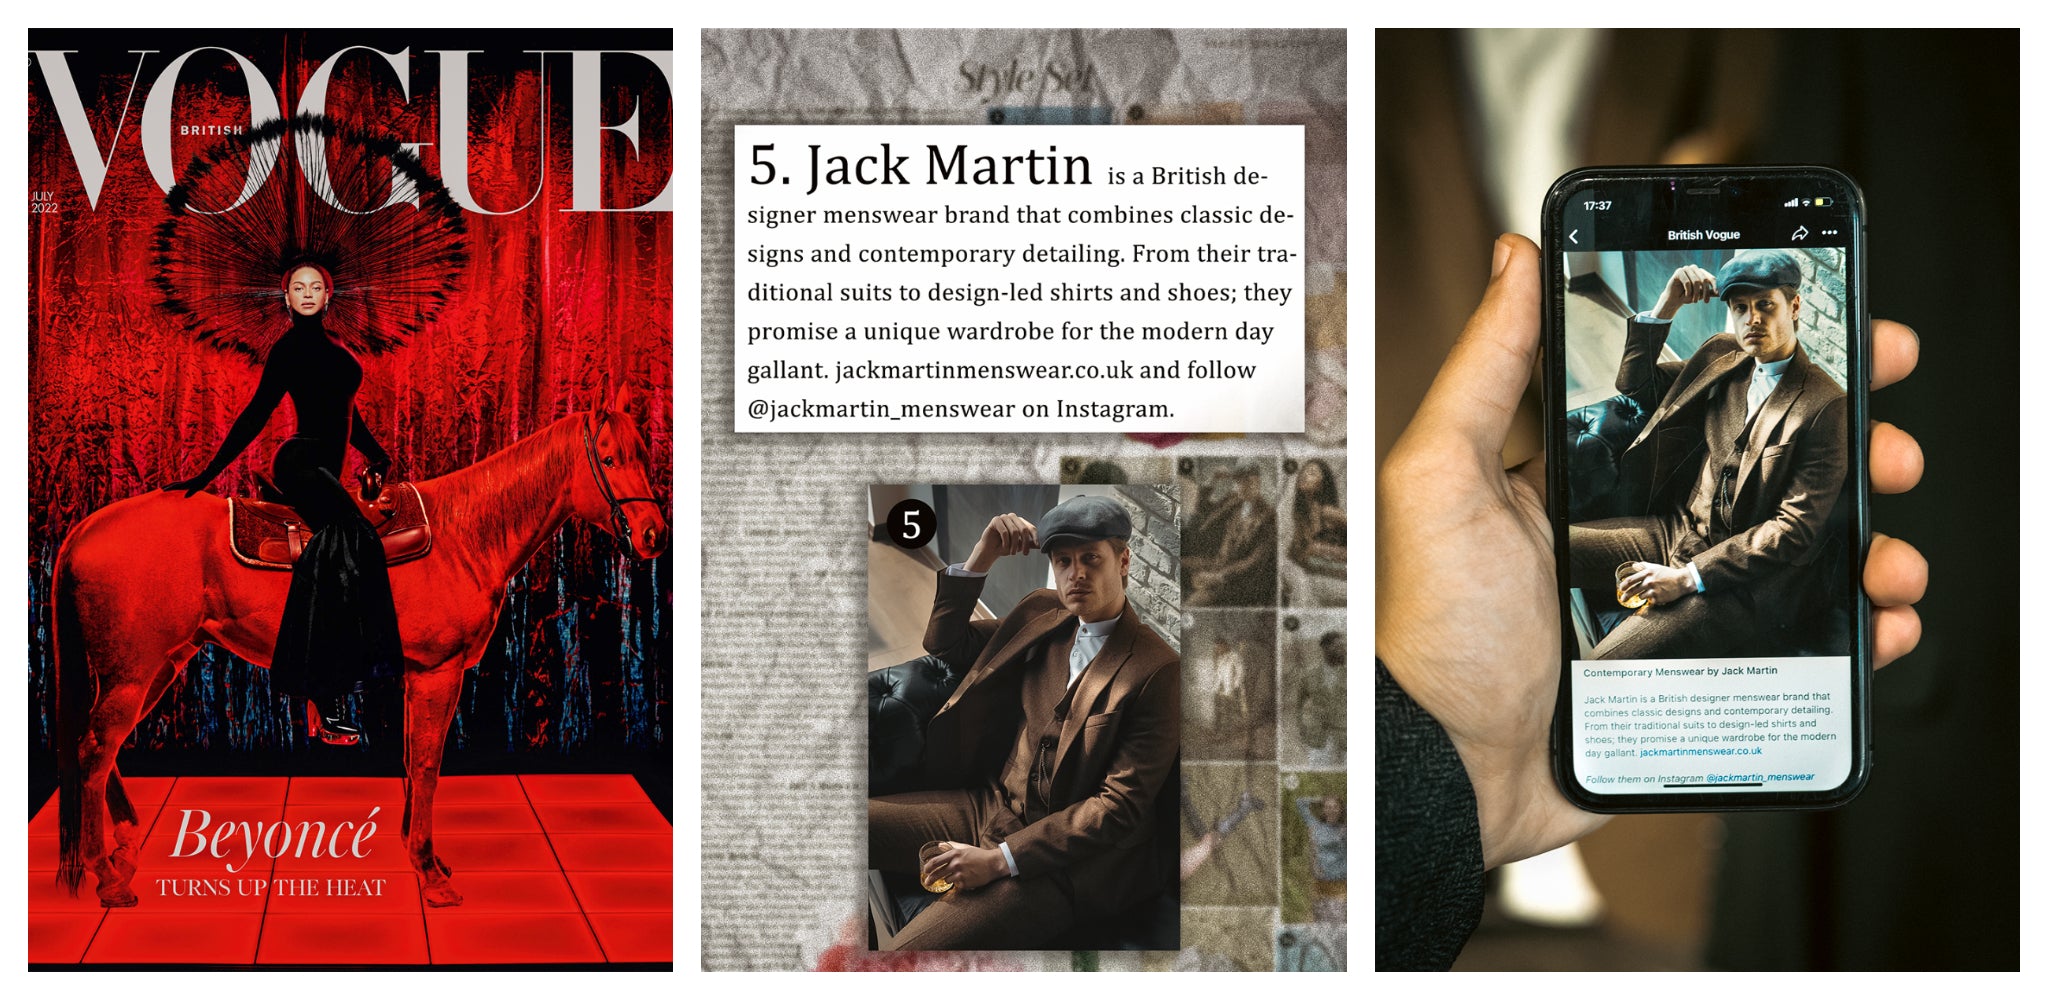 jack martin featured in vogue magazine july issue